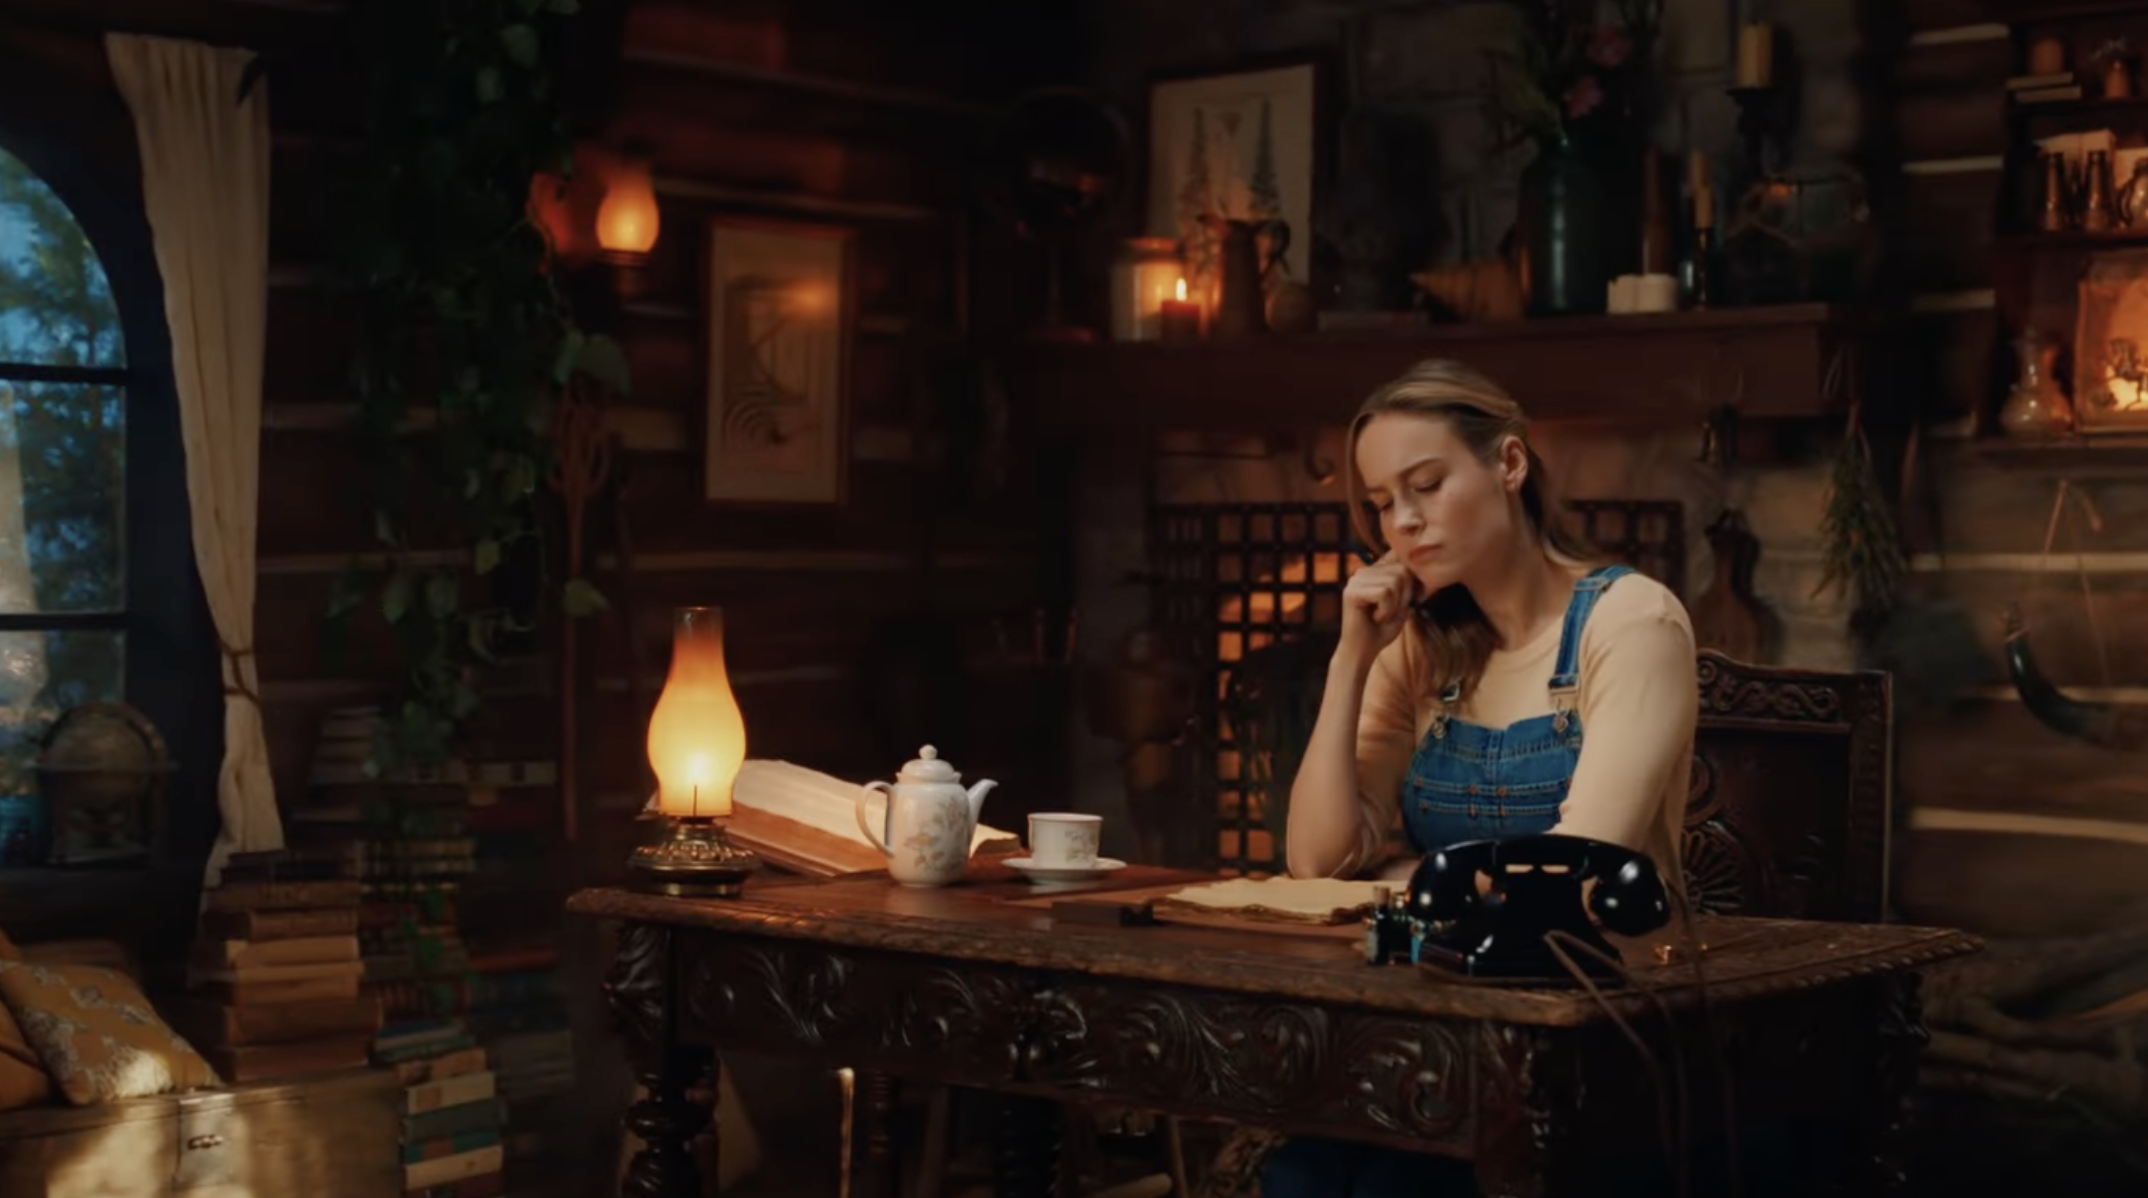 SEE IT: A Sneak Peak At Brie Larson’s New Short Film ‘Remembering’